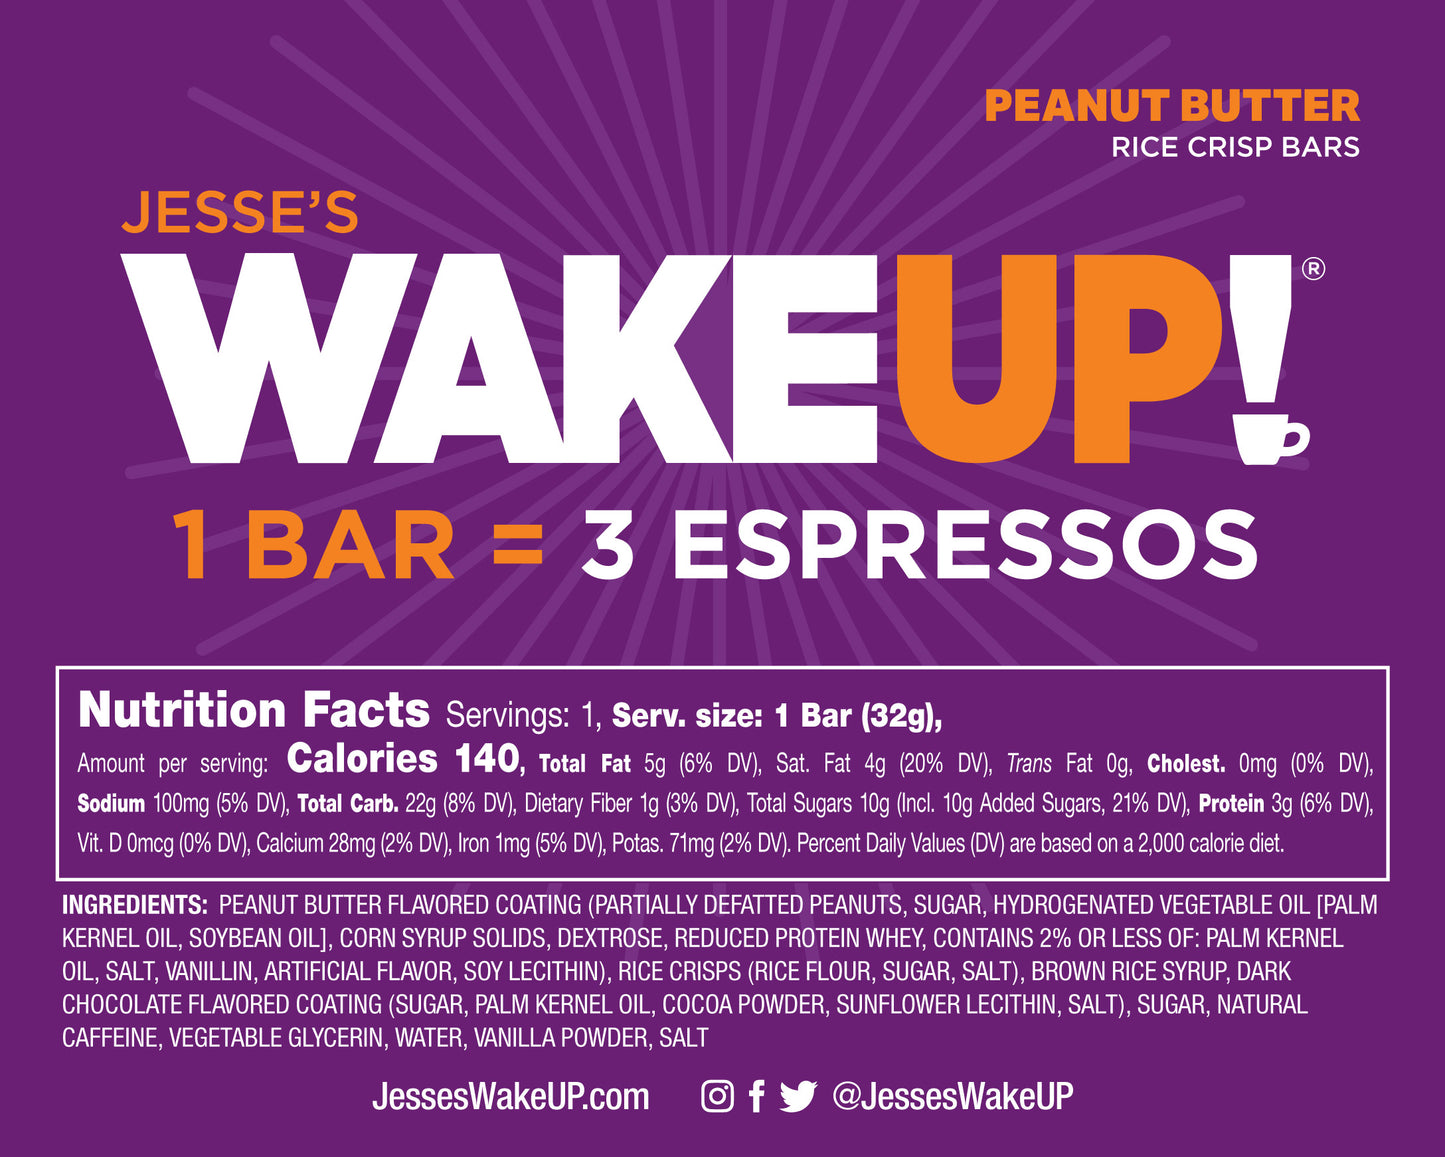 WakeUP! Peanut Butter Bars (1 Bar = 3 Espressos)